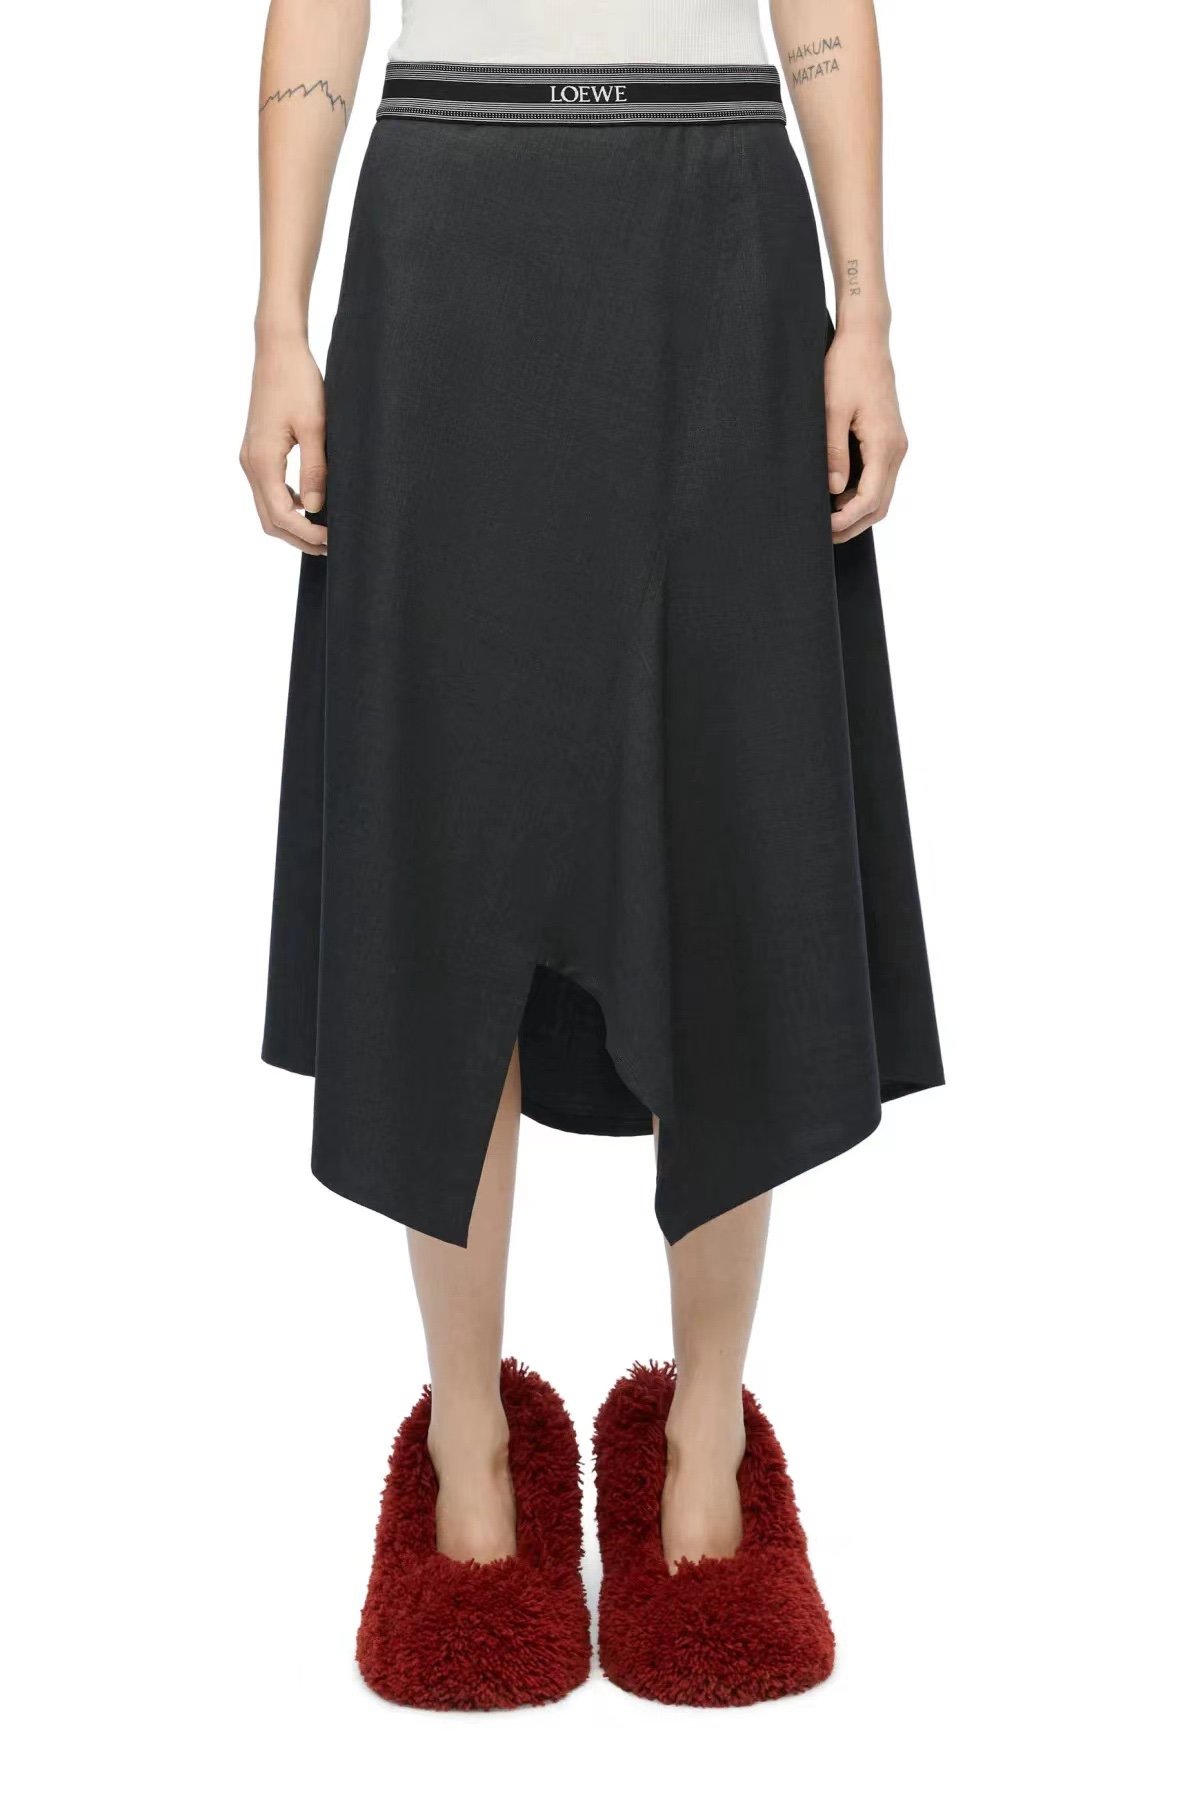 LOE24早春新款半裙 欧洲进口精纺羊毛 不对称剪裁设计 飘逸有垂感36-SD